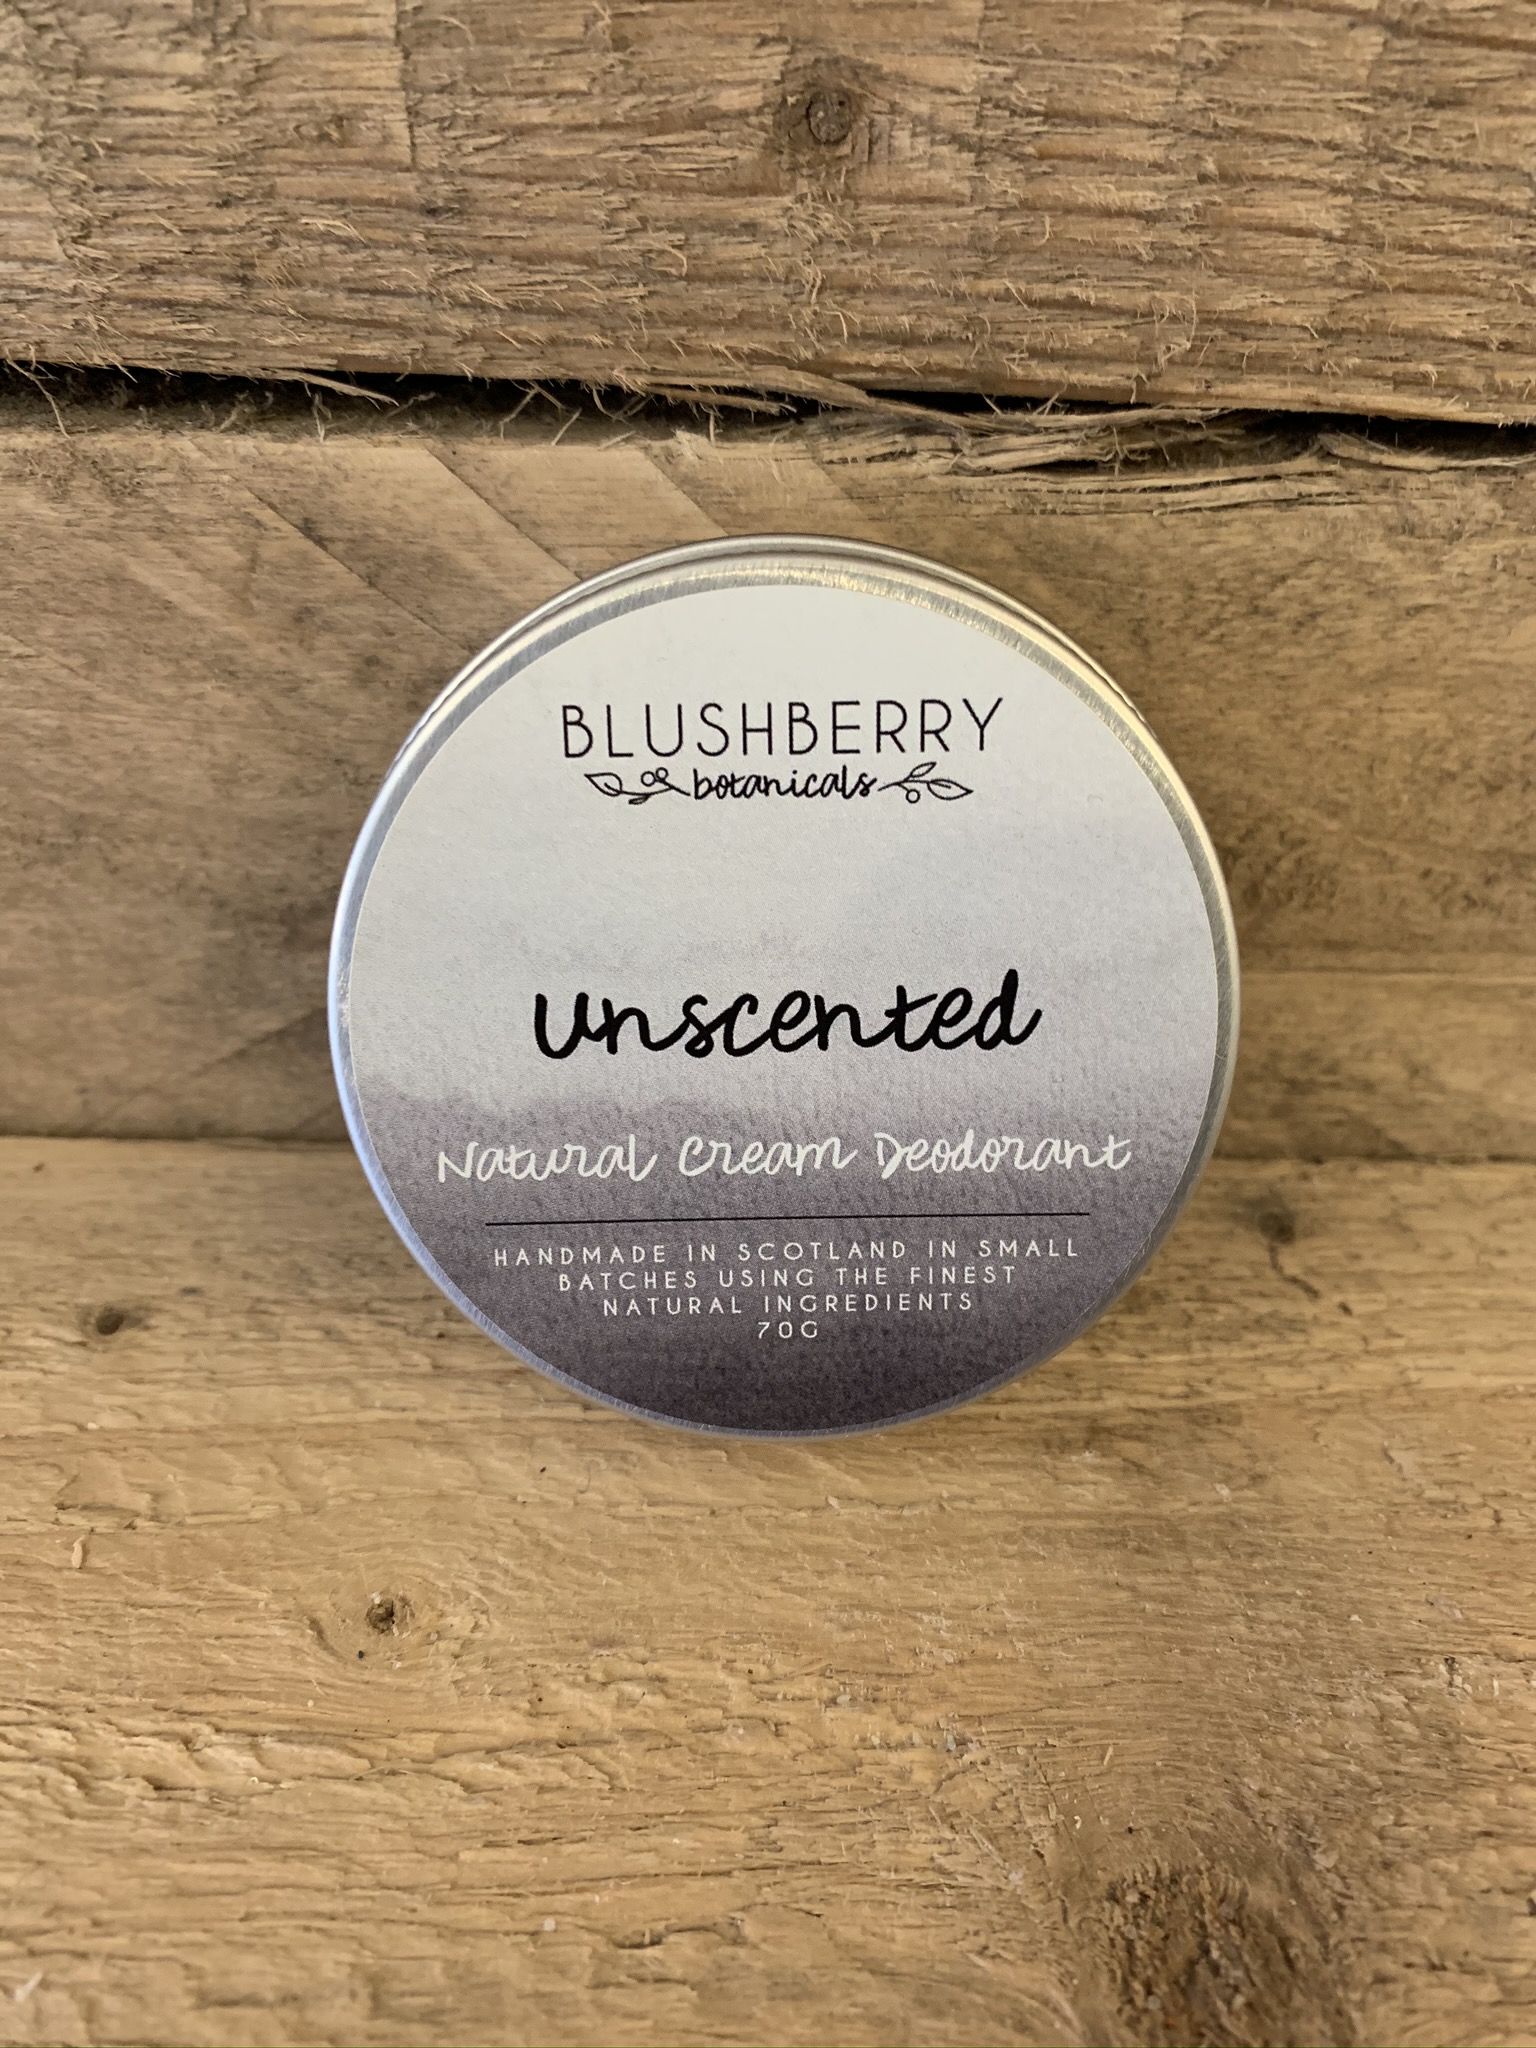 Unscented Blushberry Botanicals Natural Cream Deodorant 